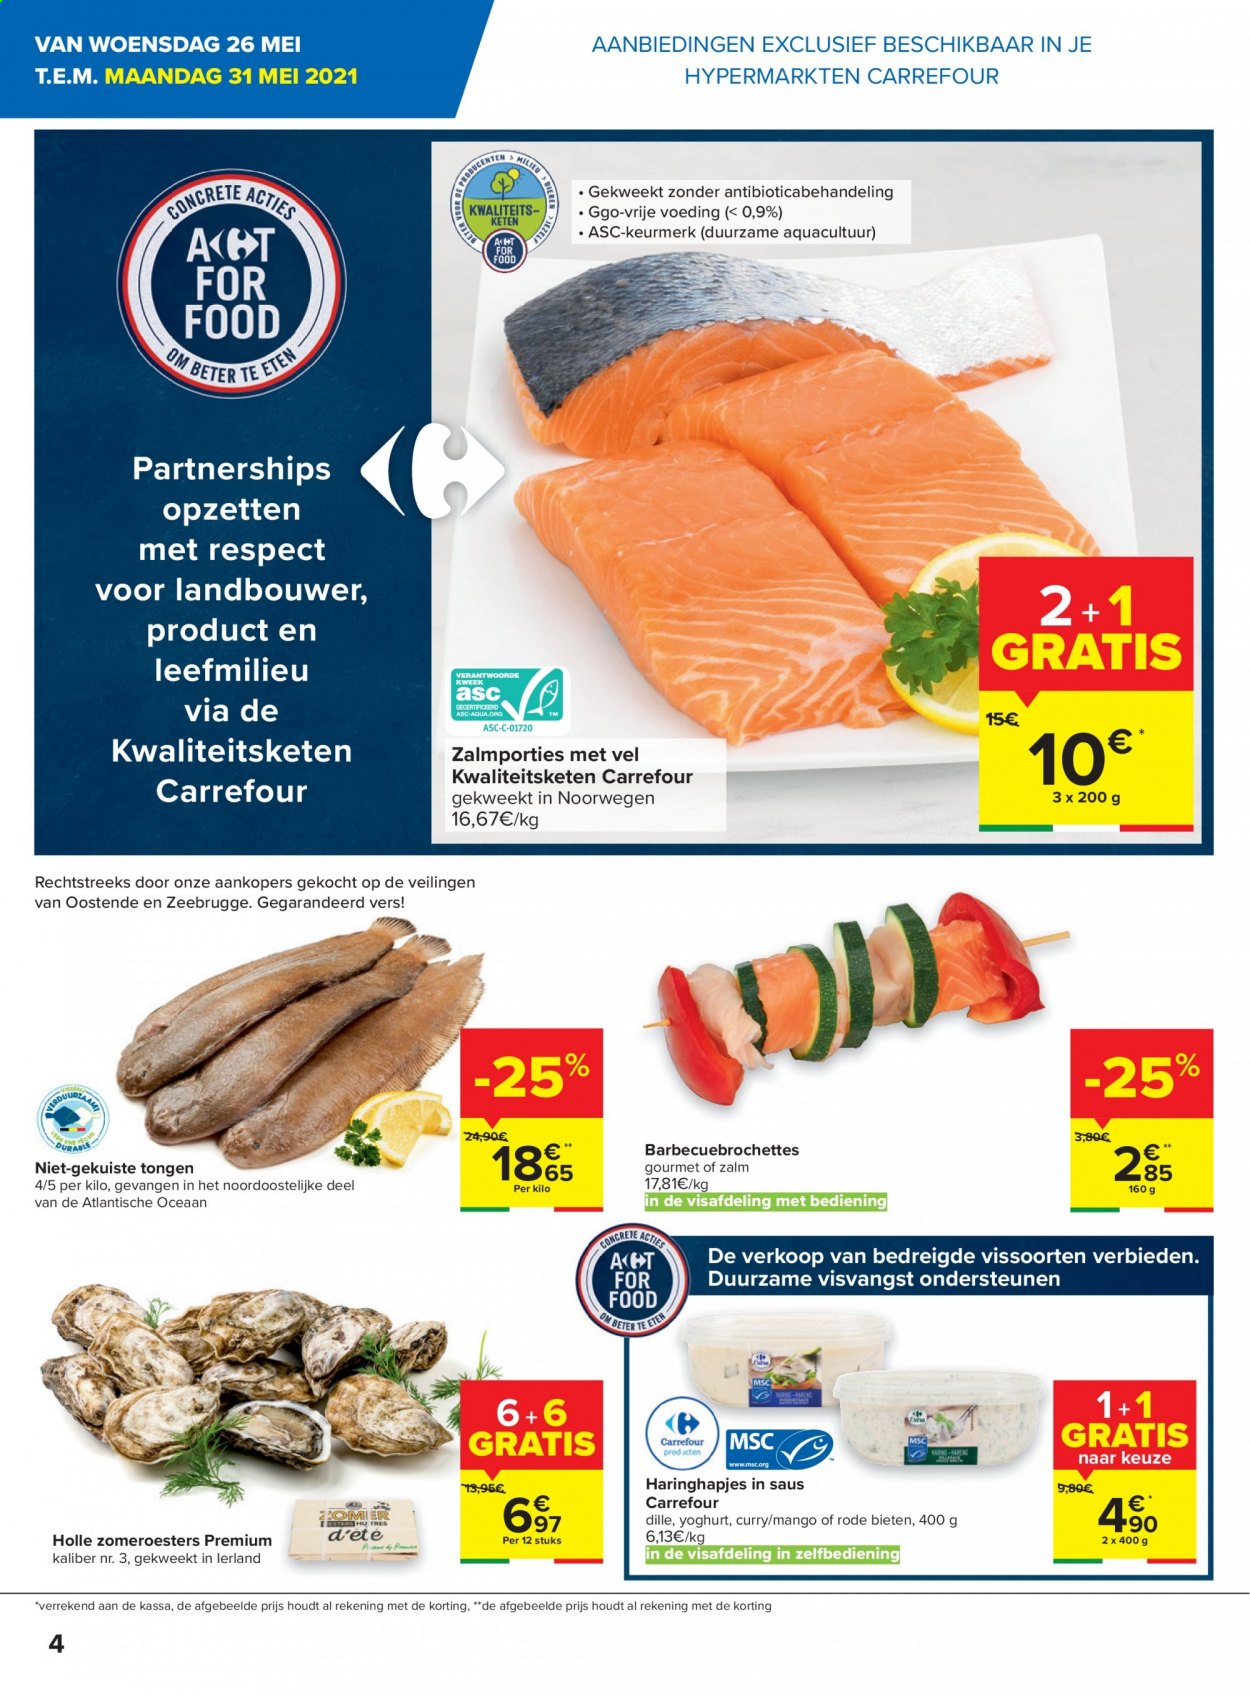 thumbnail - Carrefour hypermarkt-aanbieding - 26/05/2021 - 07/06/2021 -  producten in de aanbieding - dille, yoghurt, zalm, curry, mango. Pagina 4.